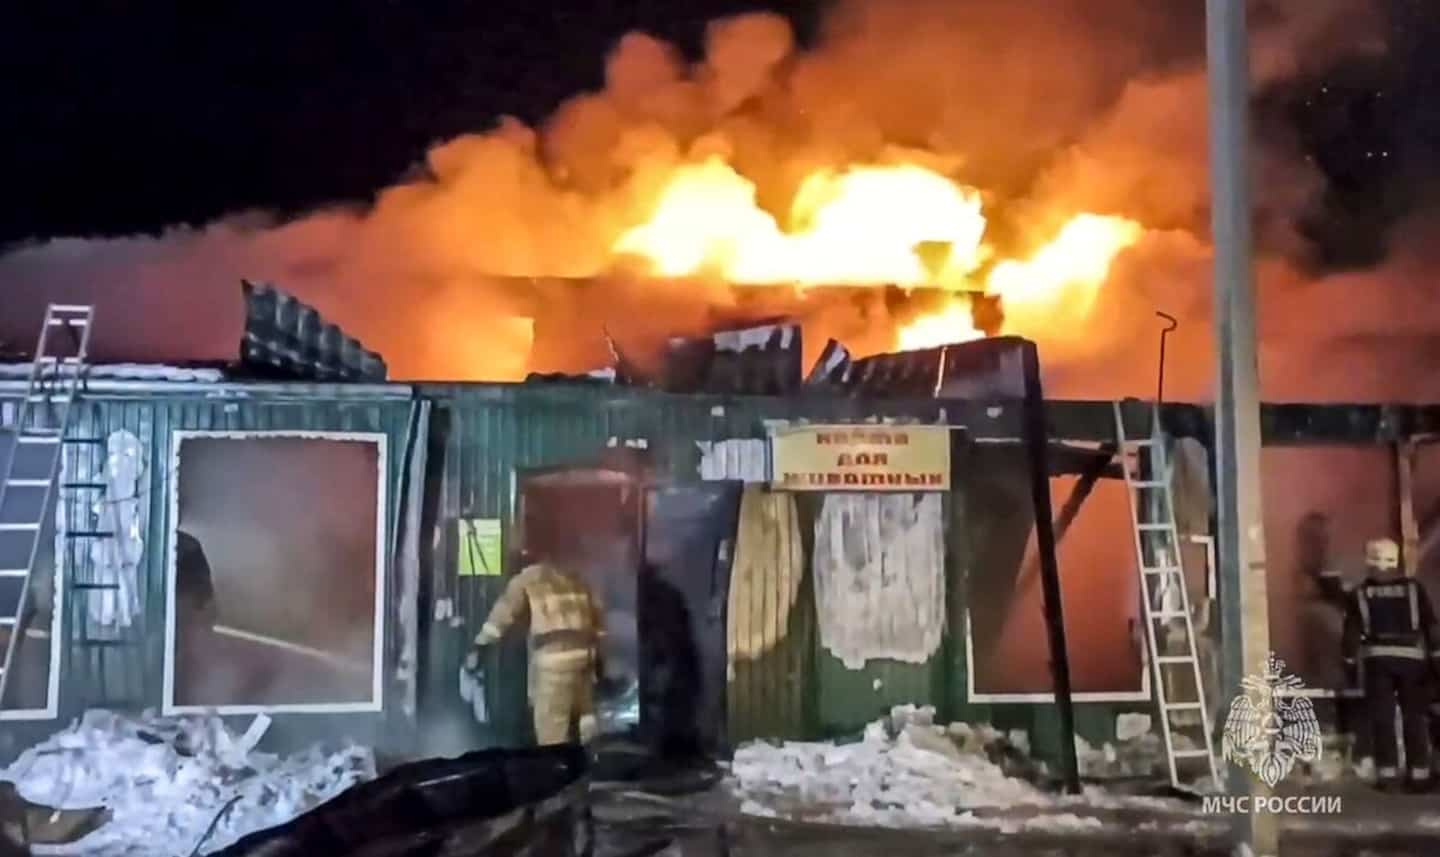 Russia: 22 dead in the fire of a private retirement home in Siberia